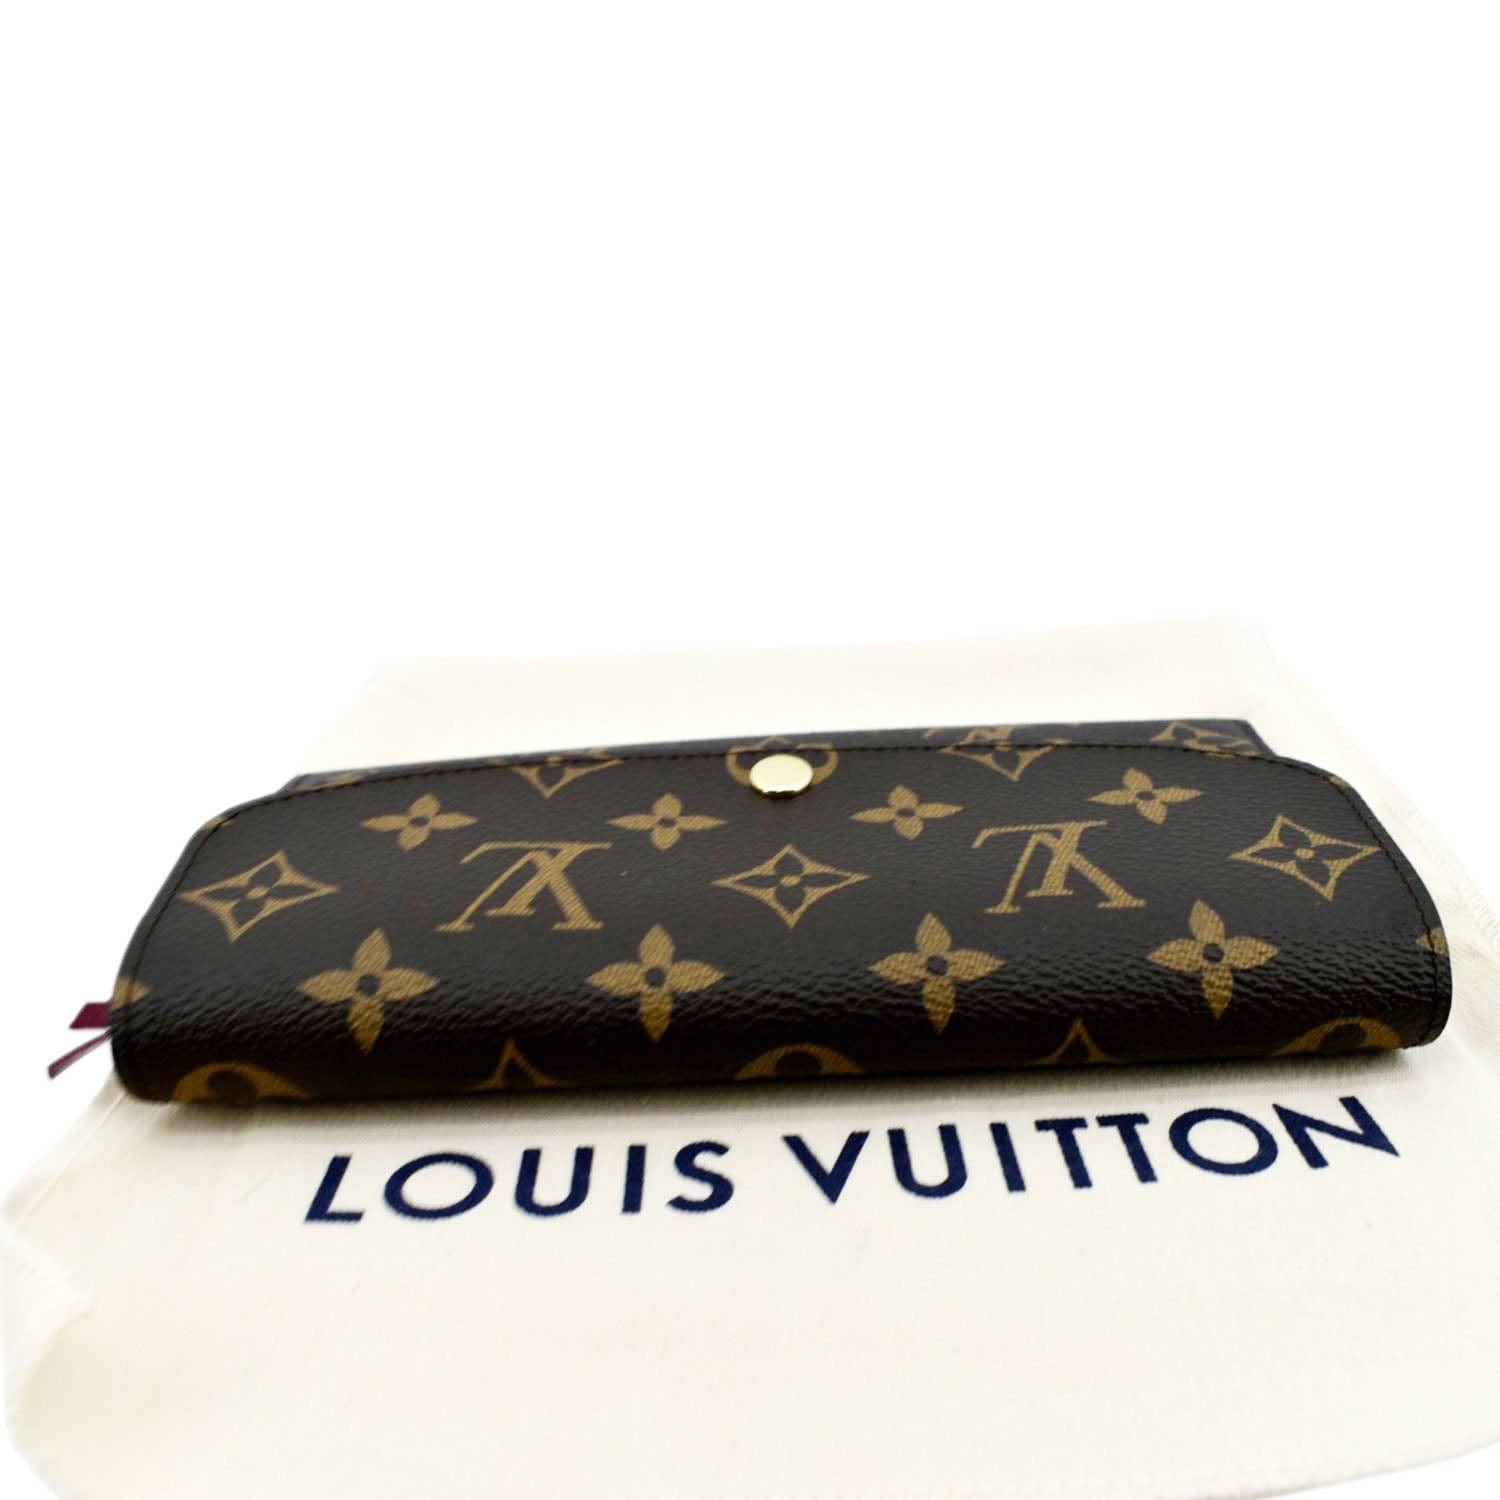 My new Louis Vuitton Emilie Wallet. Fuchsia